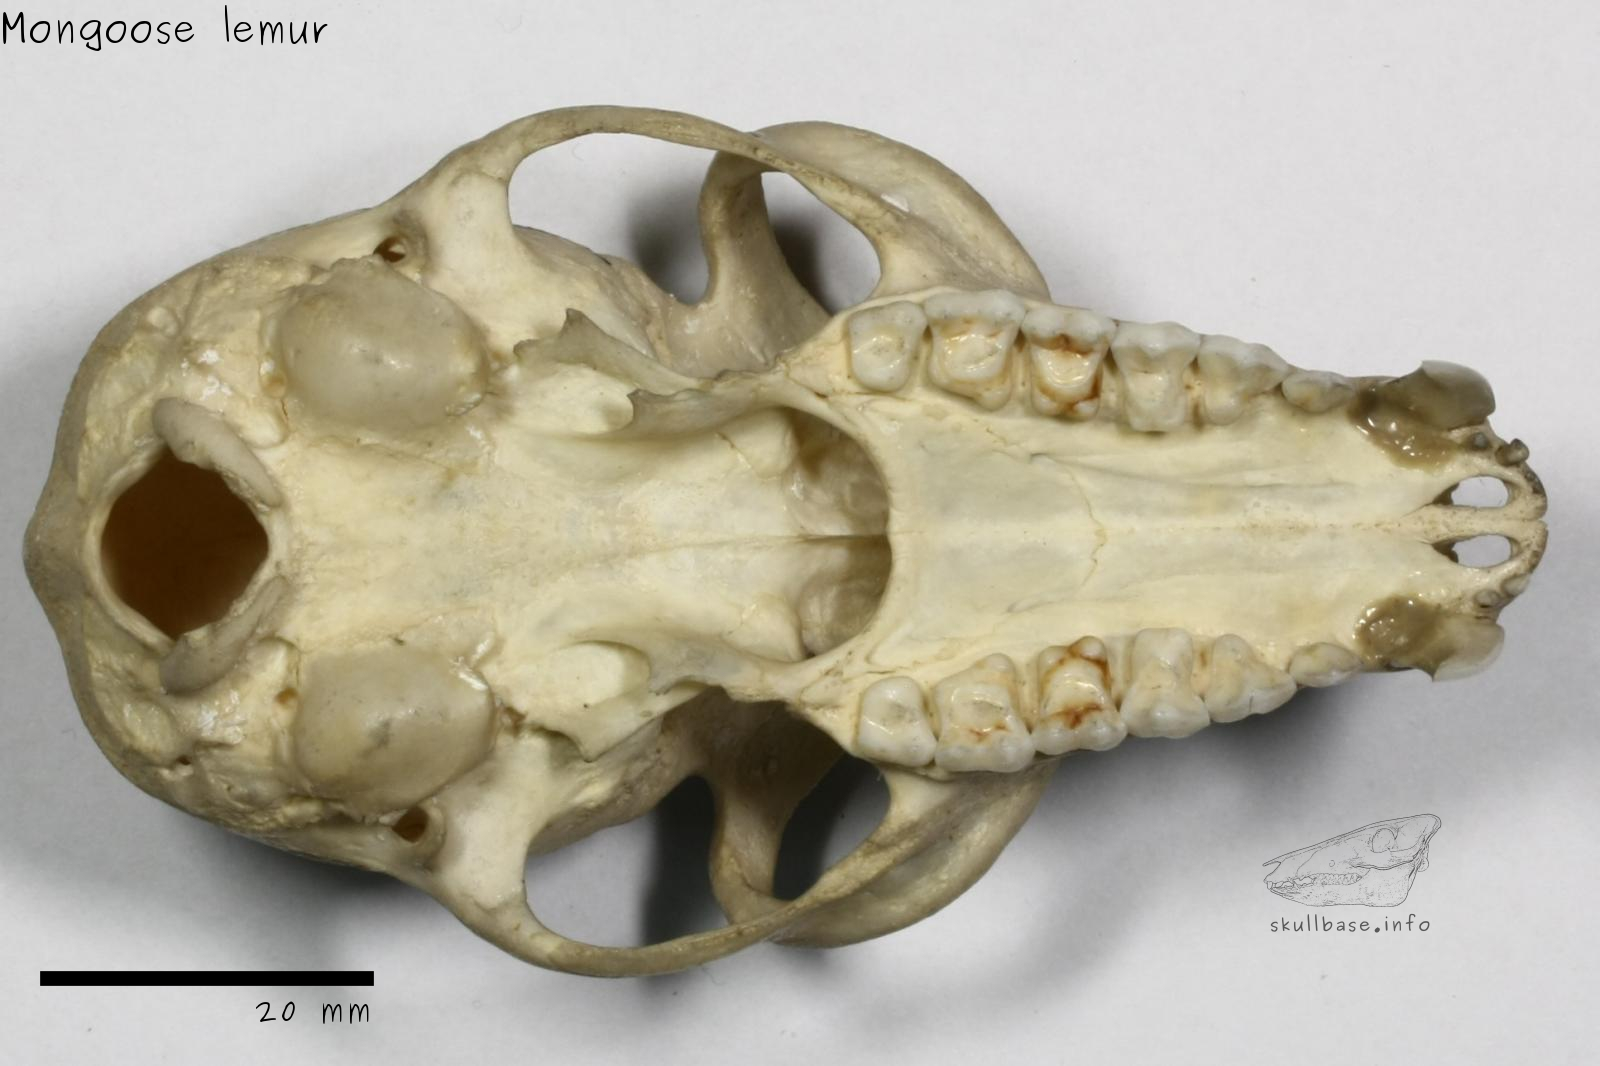 Mongoose lemur (Eulemur mongoz) skull ventral view